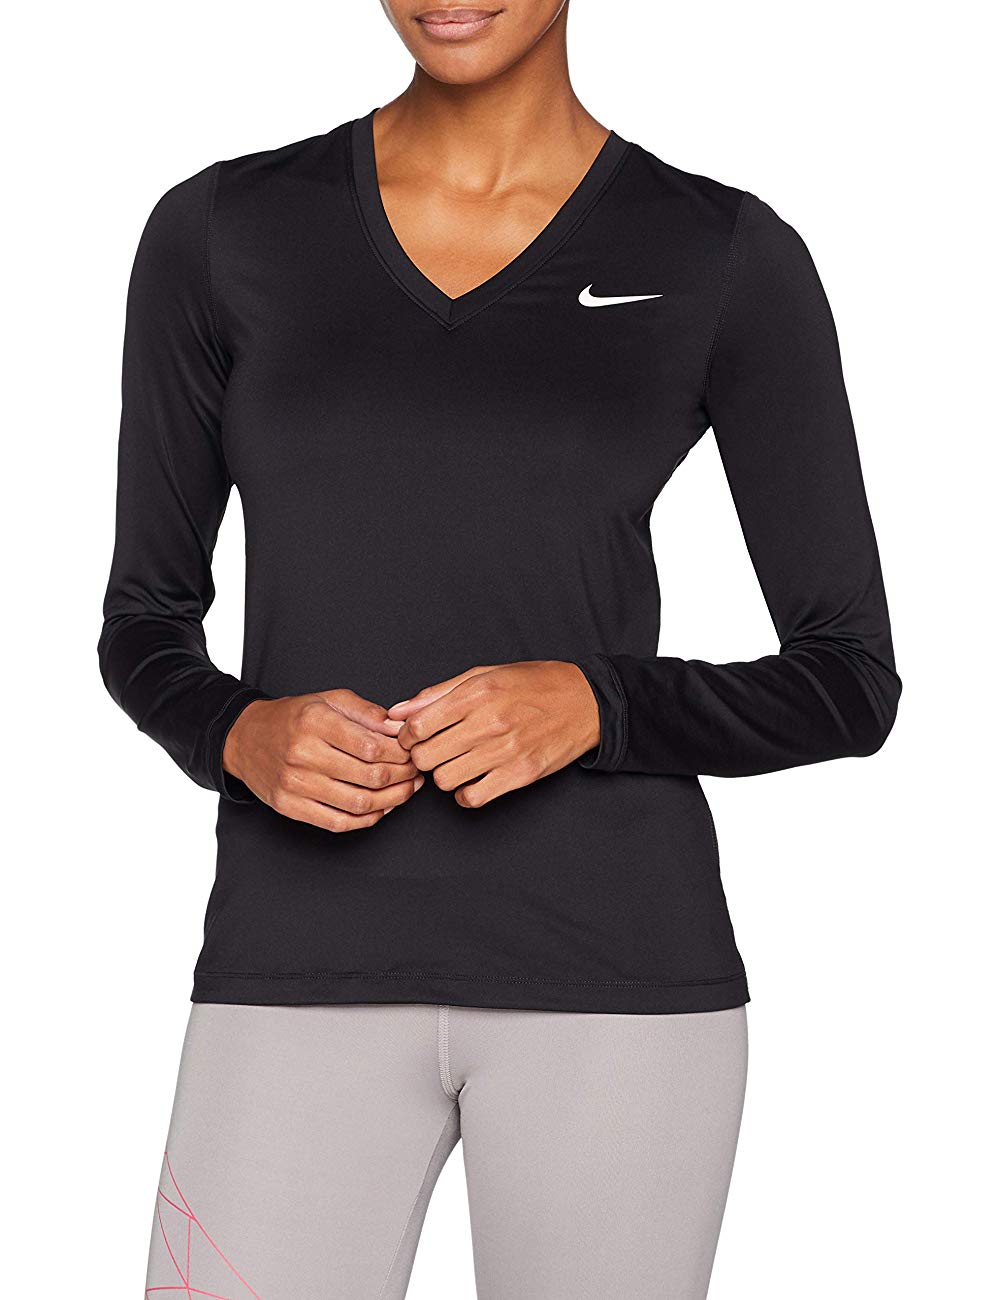 Nike Women's Dri-fit Victory Long Sleeve Top